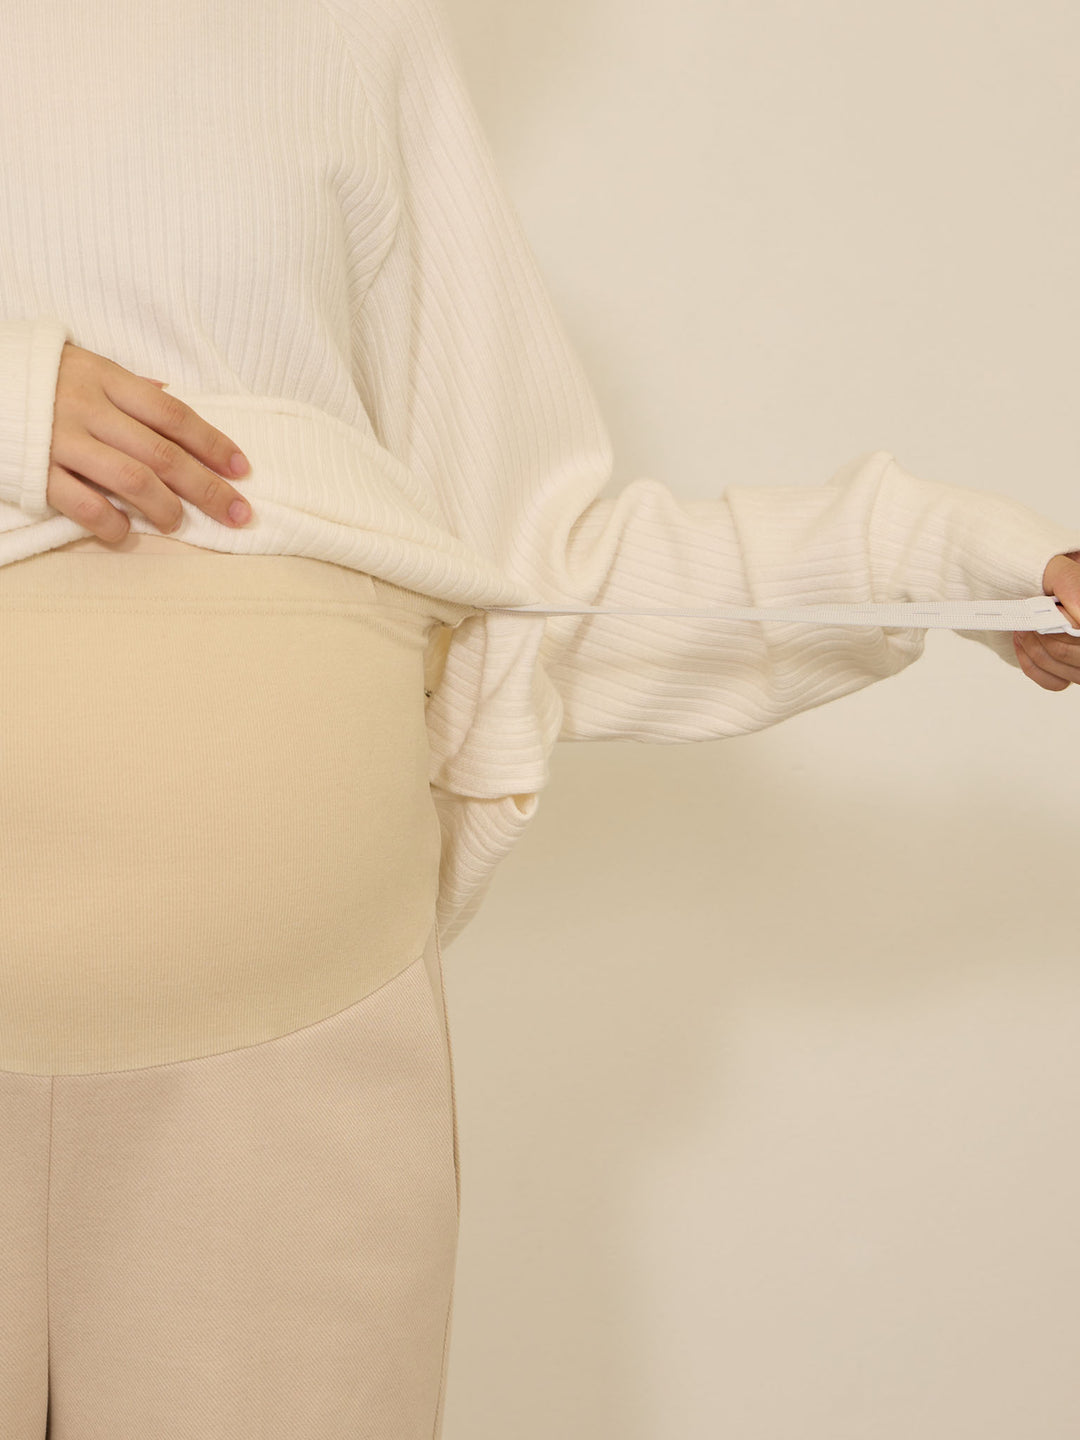 [Maternity/Postpartum] Brushed beautiful leg maternity pants Gray